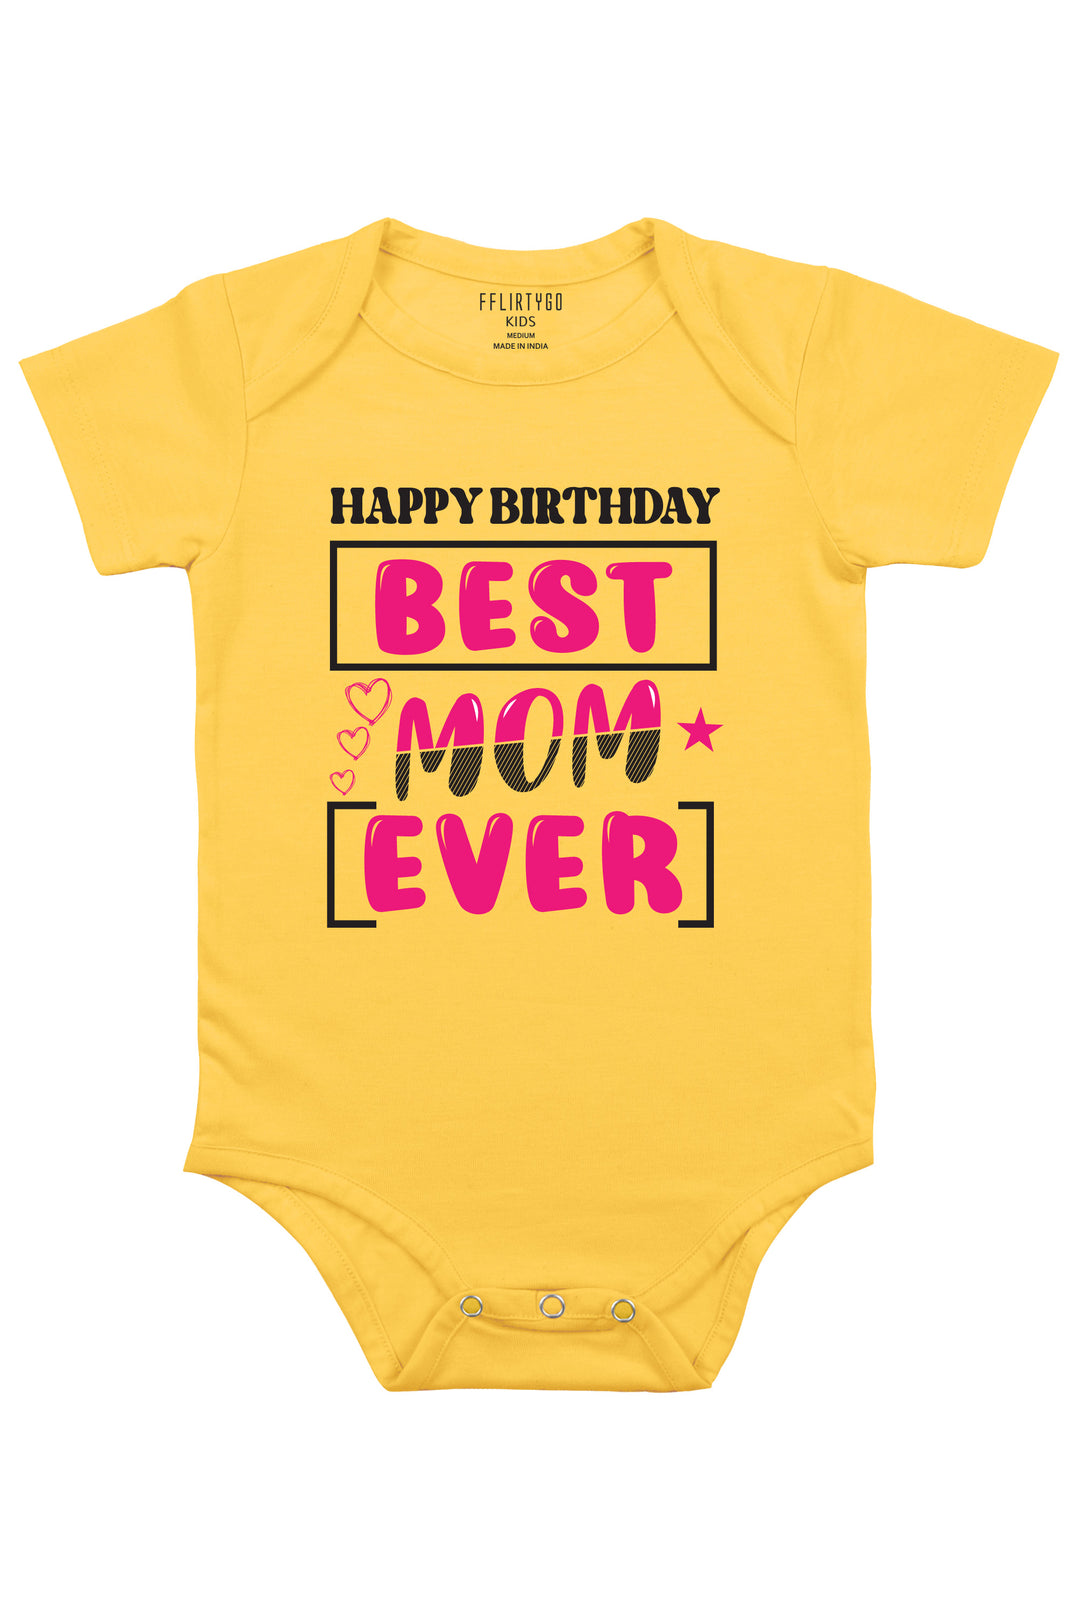 Happy Birthday Best Mom Ever Baby Romper | Onesies